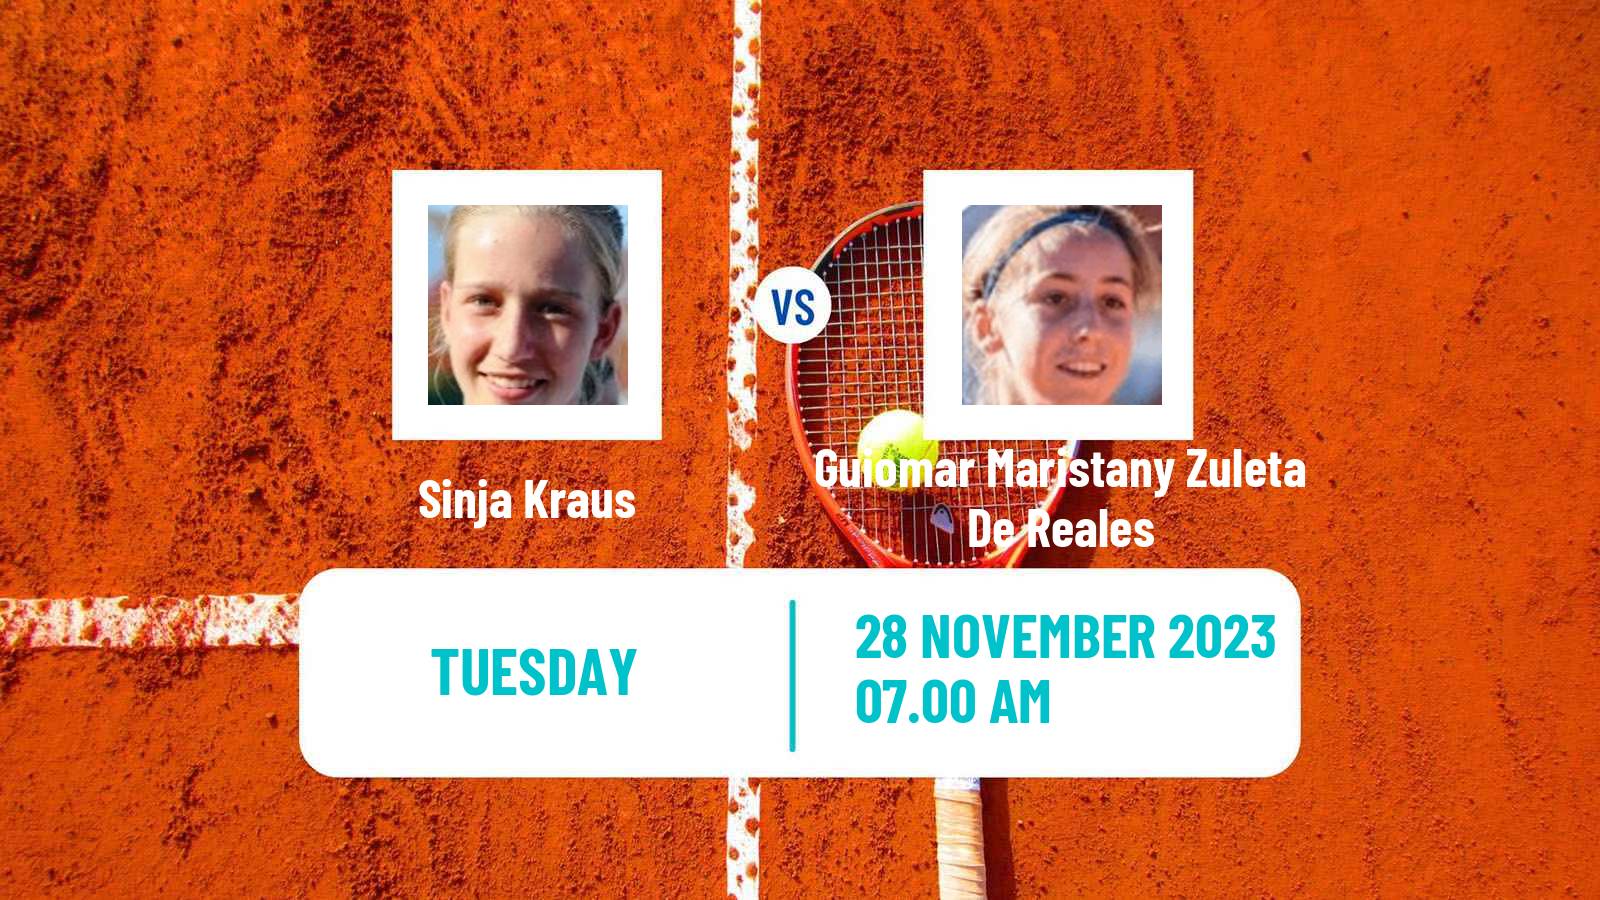 Tennis ITF W25 Limassol 2 Women 2023 Sinja Kraus - Guiomar Maristany Zuleta De Reales